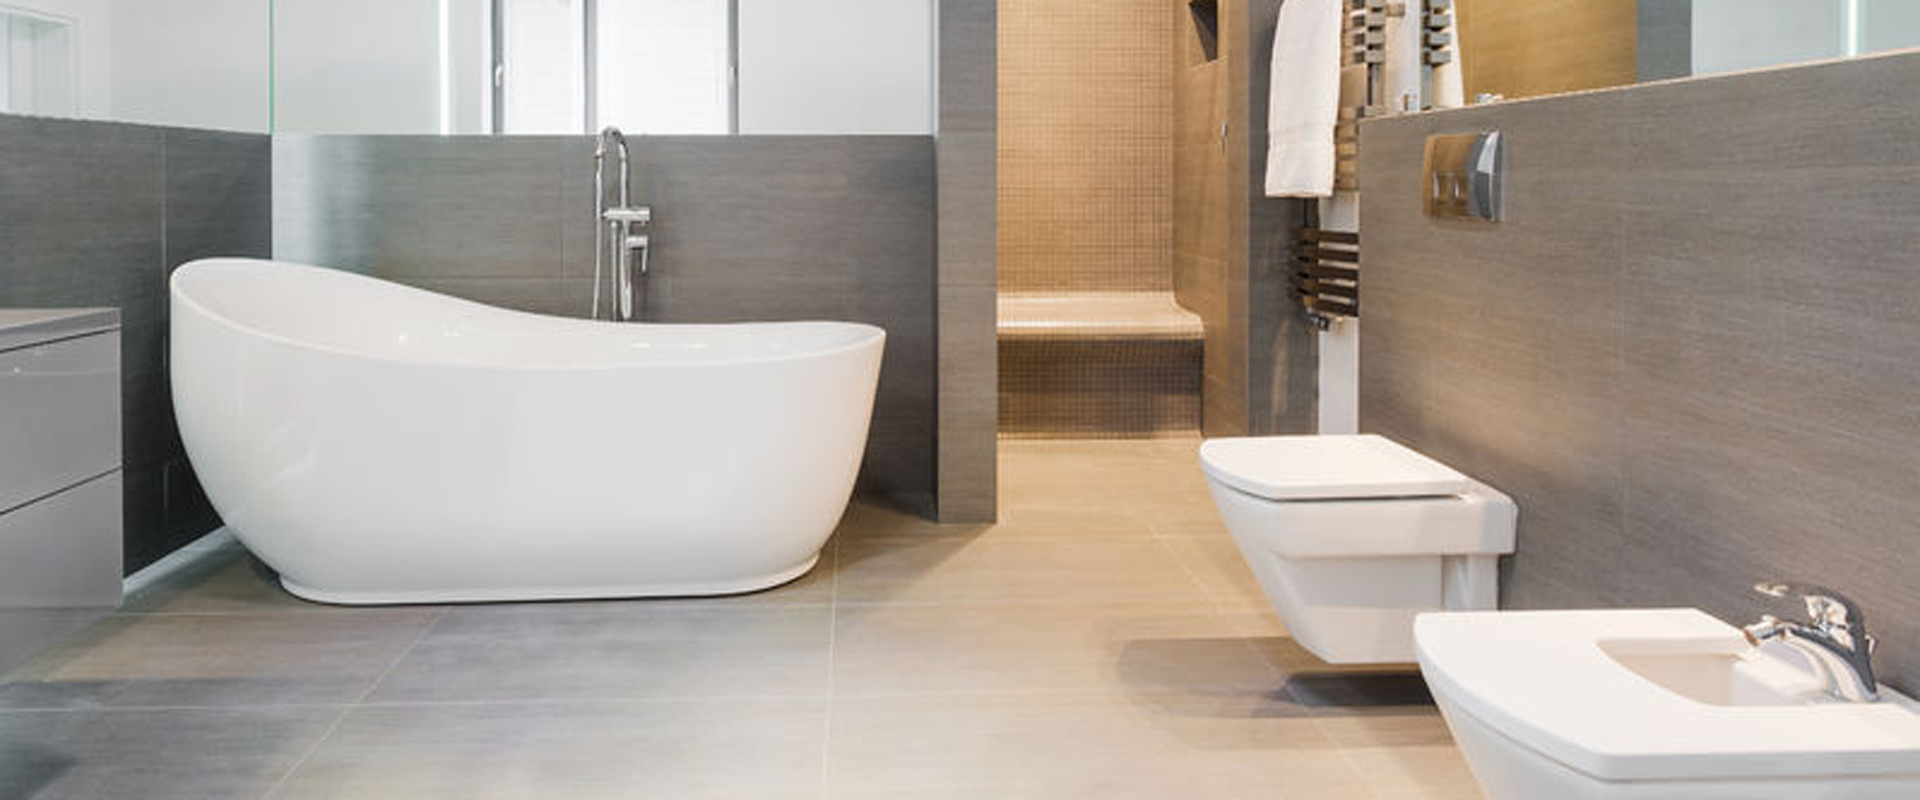 41889875 - designed freestanding bath in gray modern bathroom